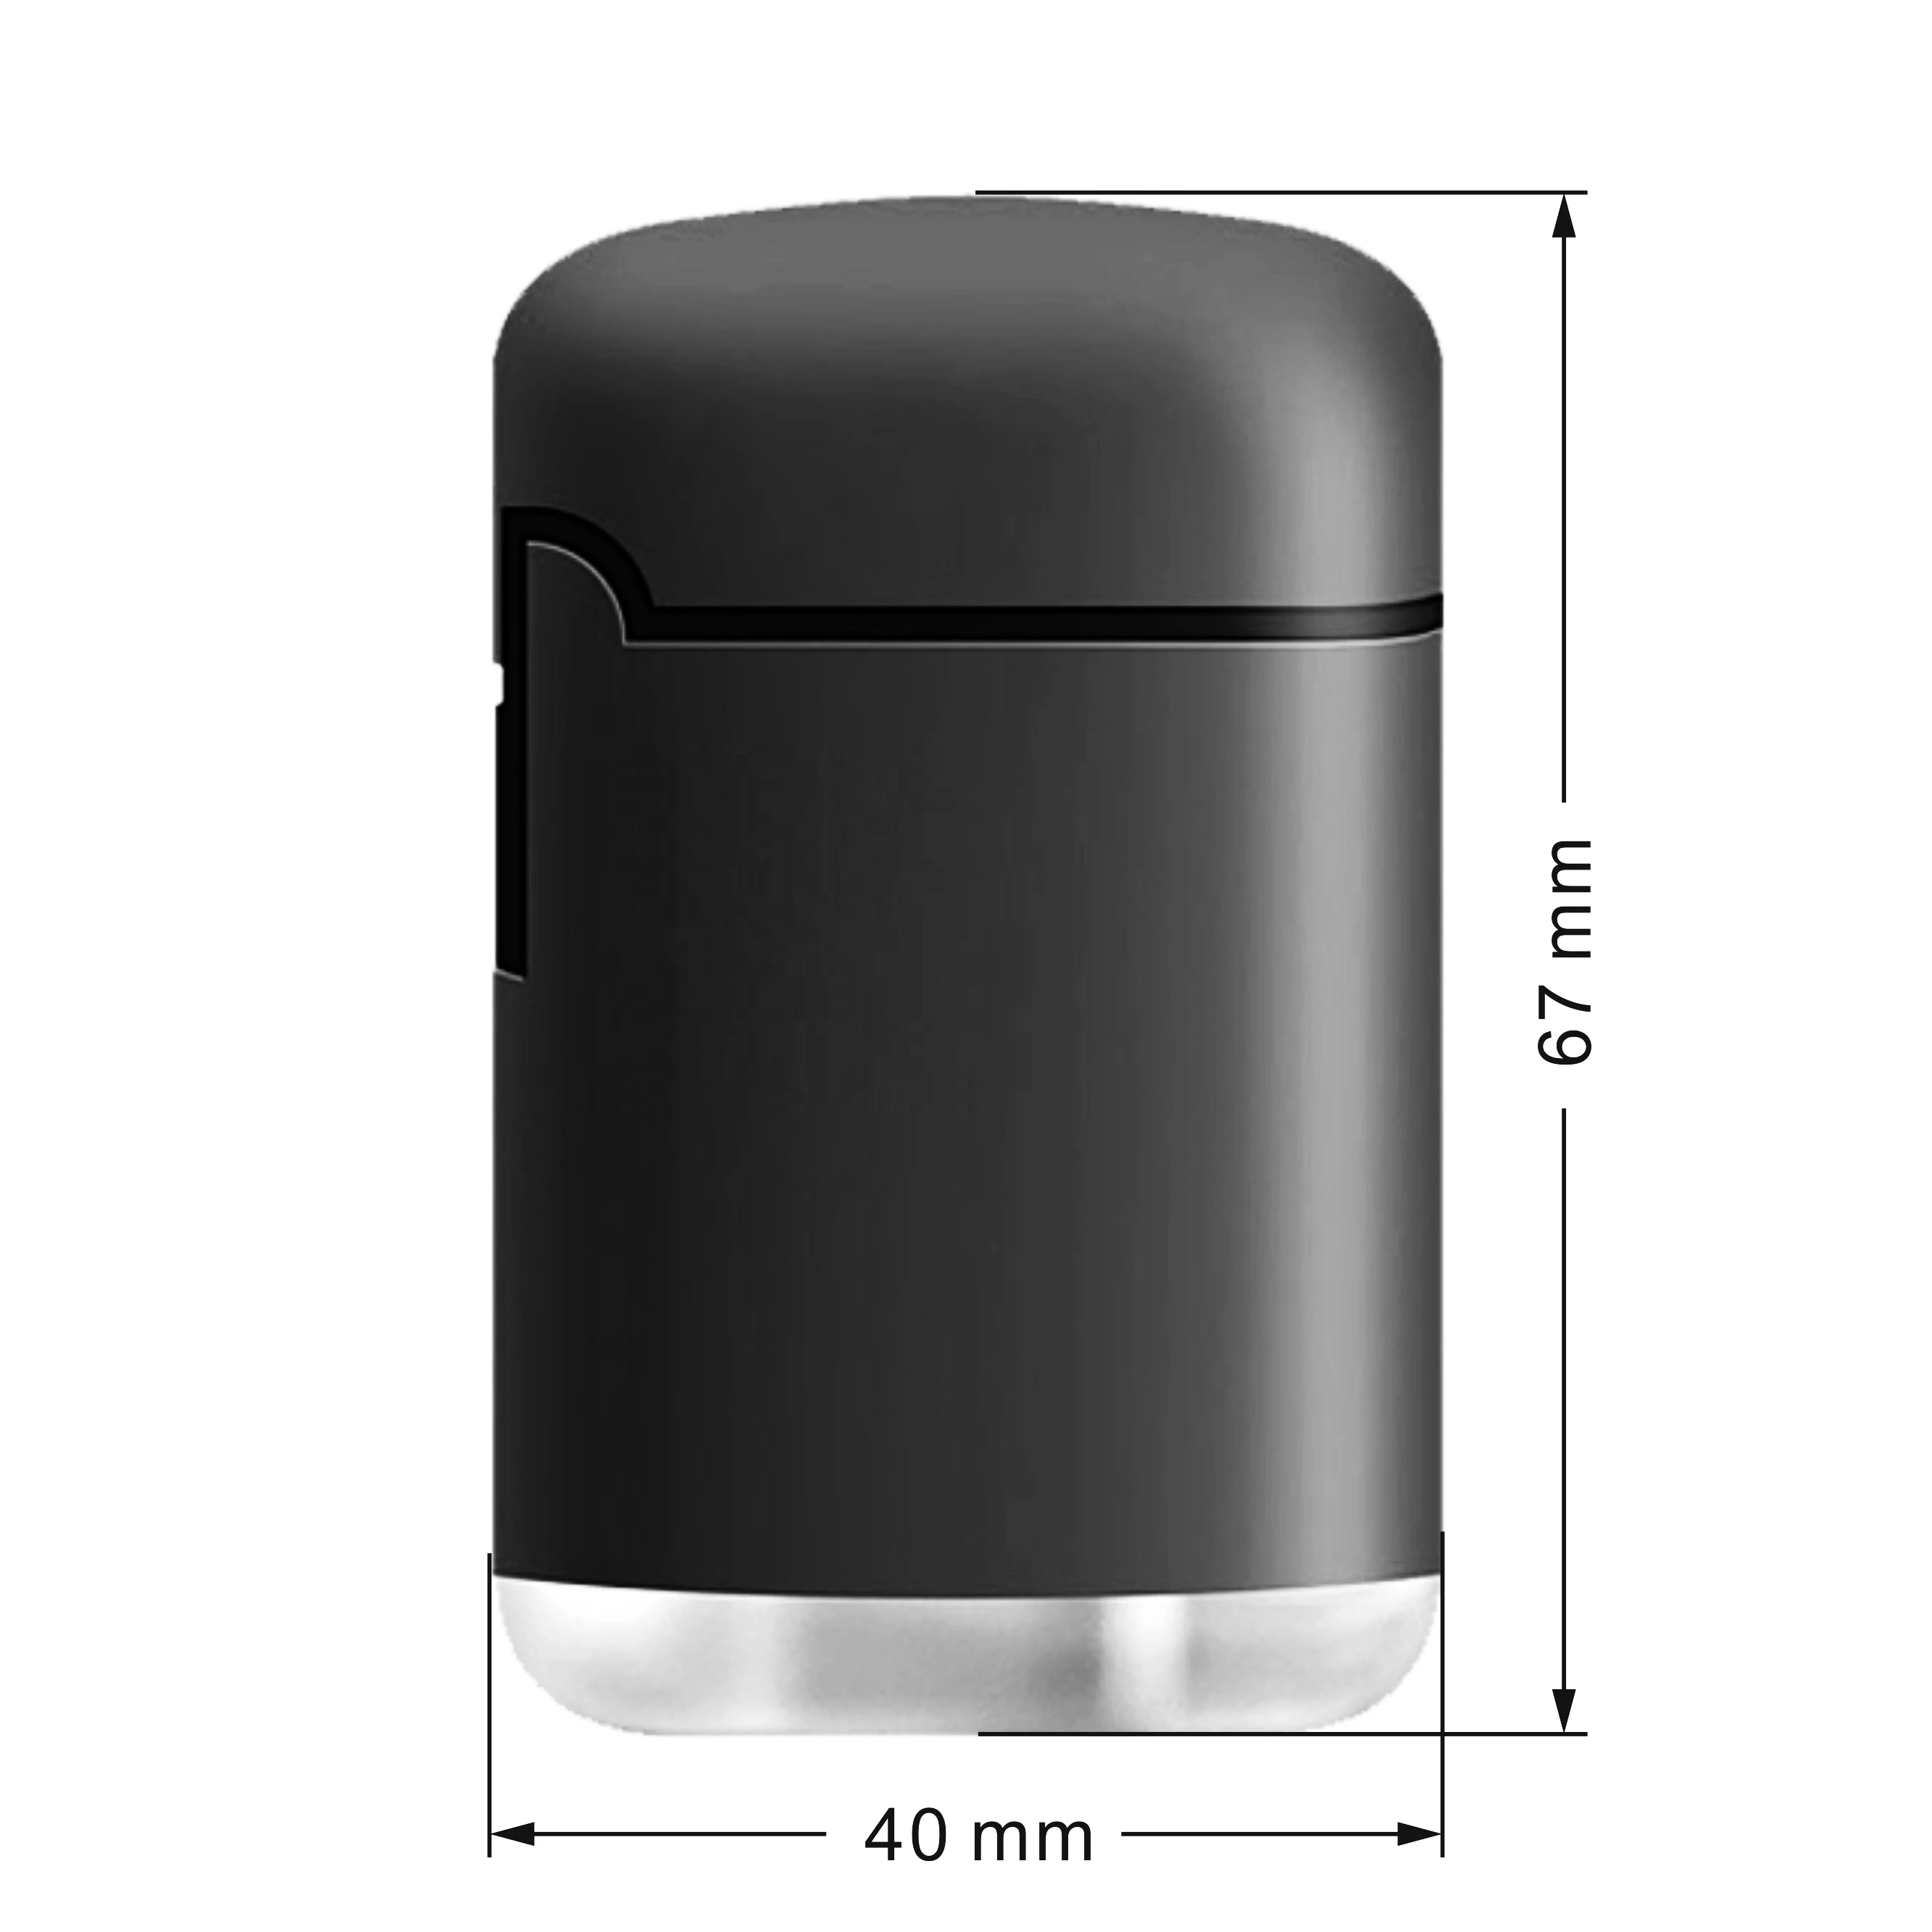 ZENGAZ ISO9994 Rubber Surface Wholesale Cheap Supplier Gas Refill Lighter